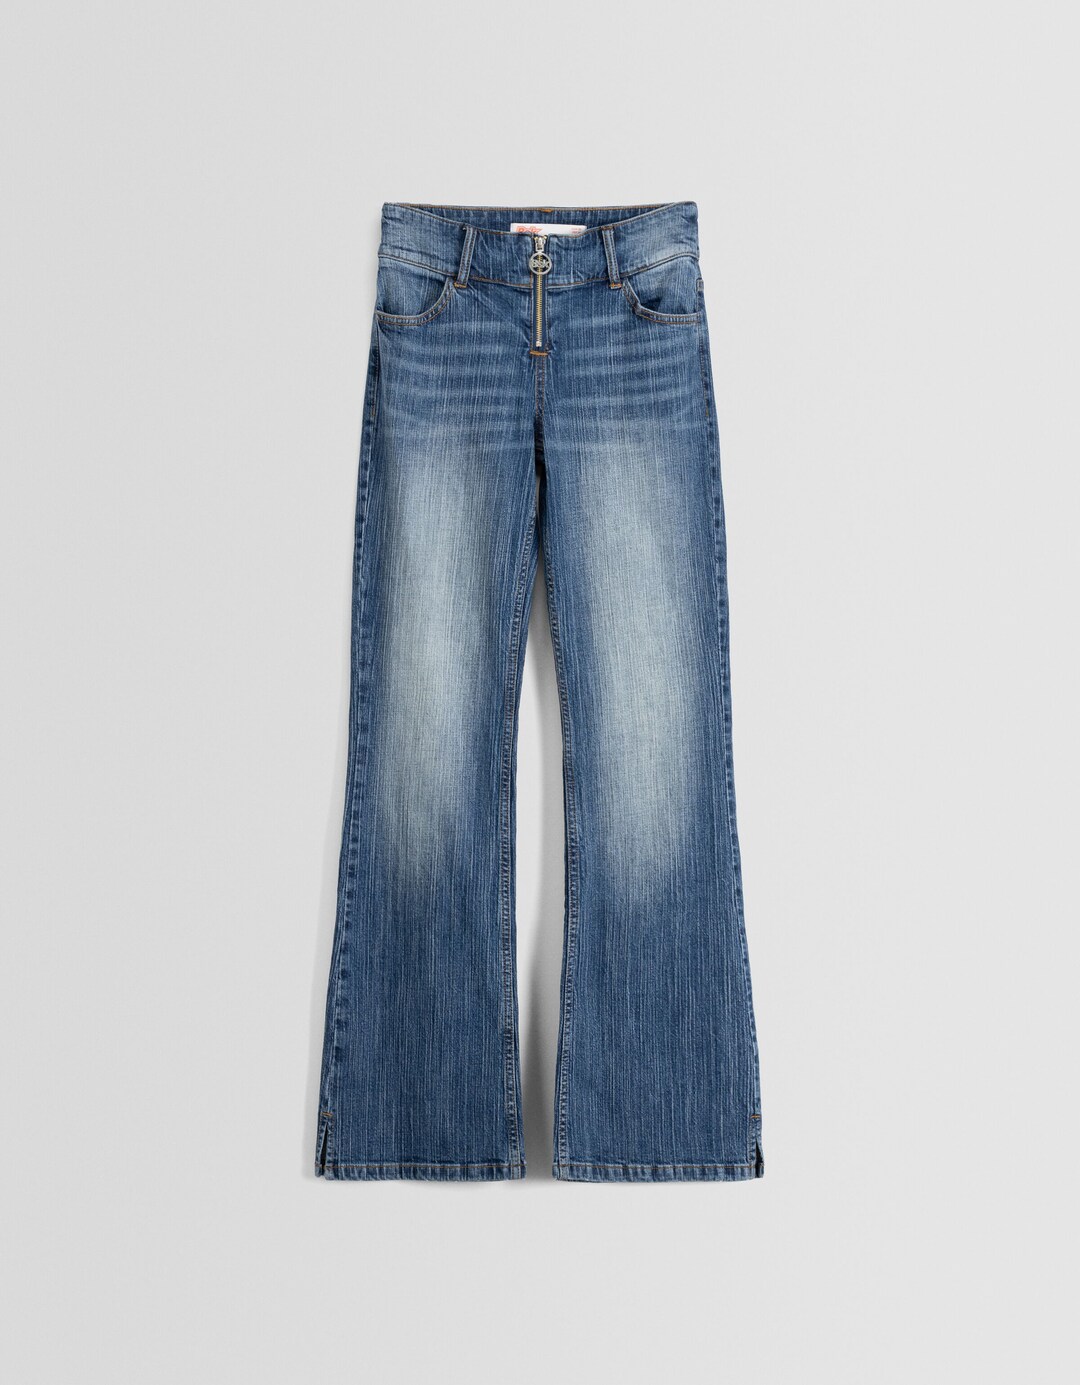 Klokkende jeans met lage taille